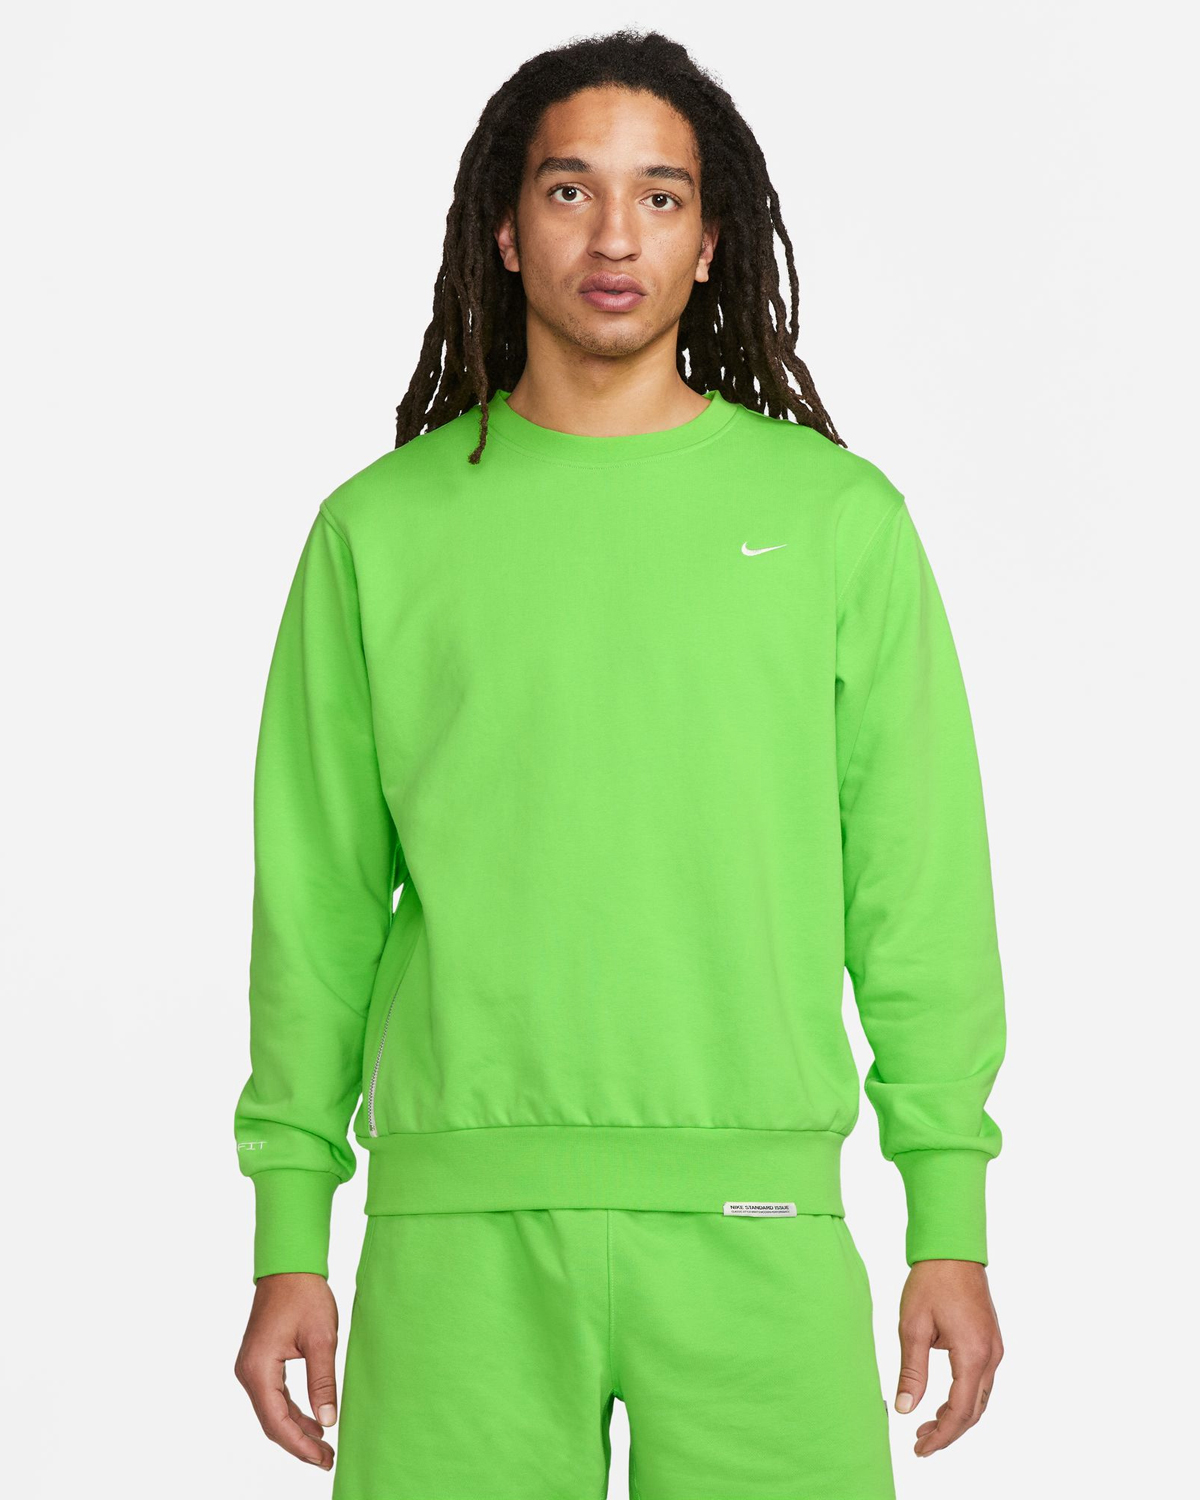 Nike-Kobe-6-Reverse-Grinch-Shirt